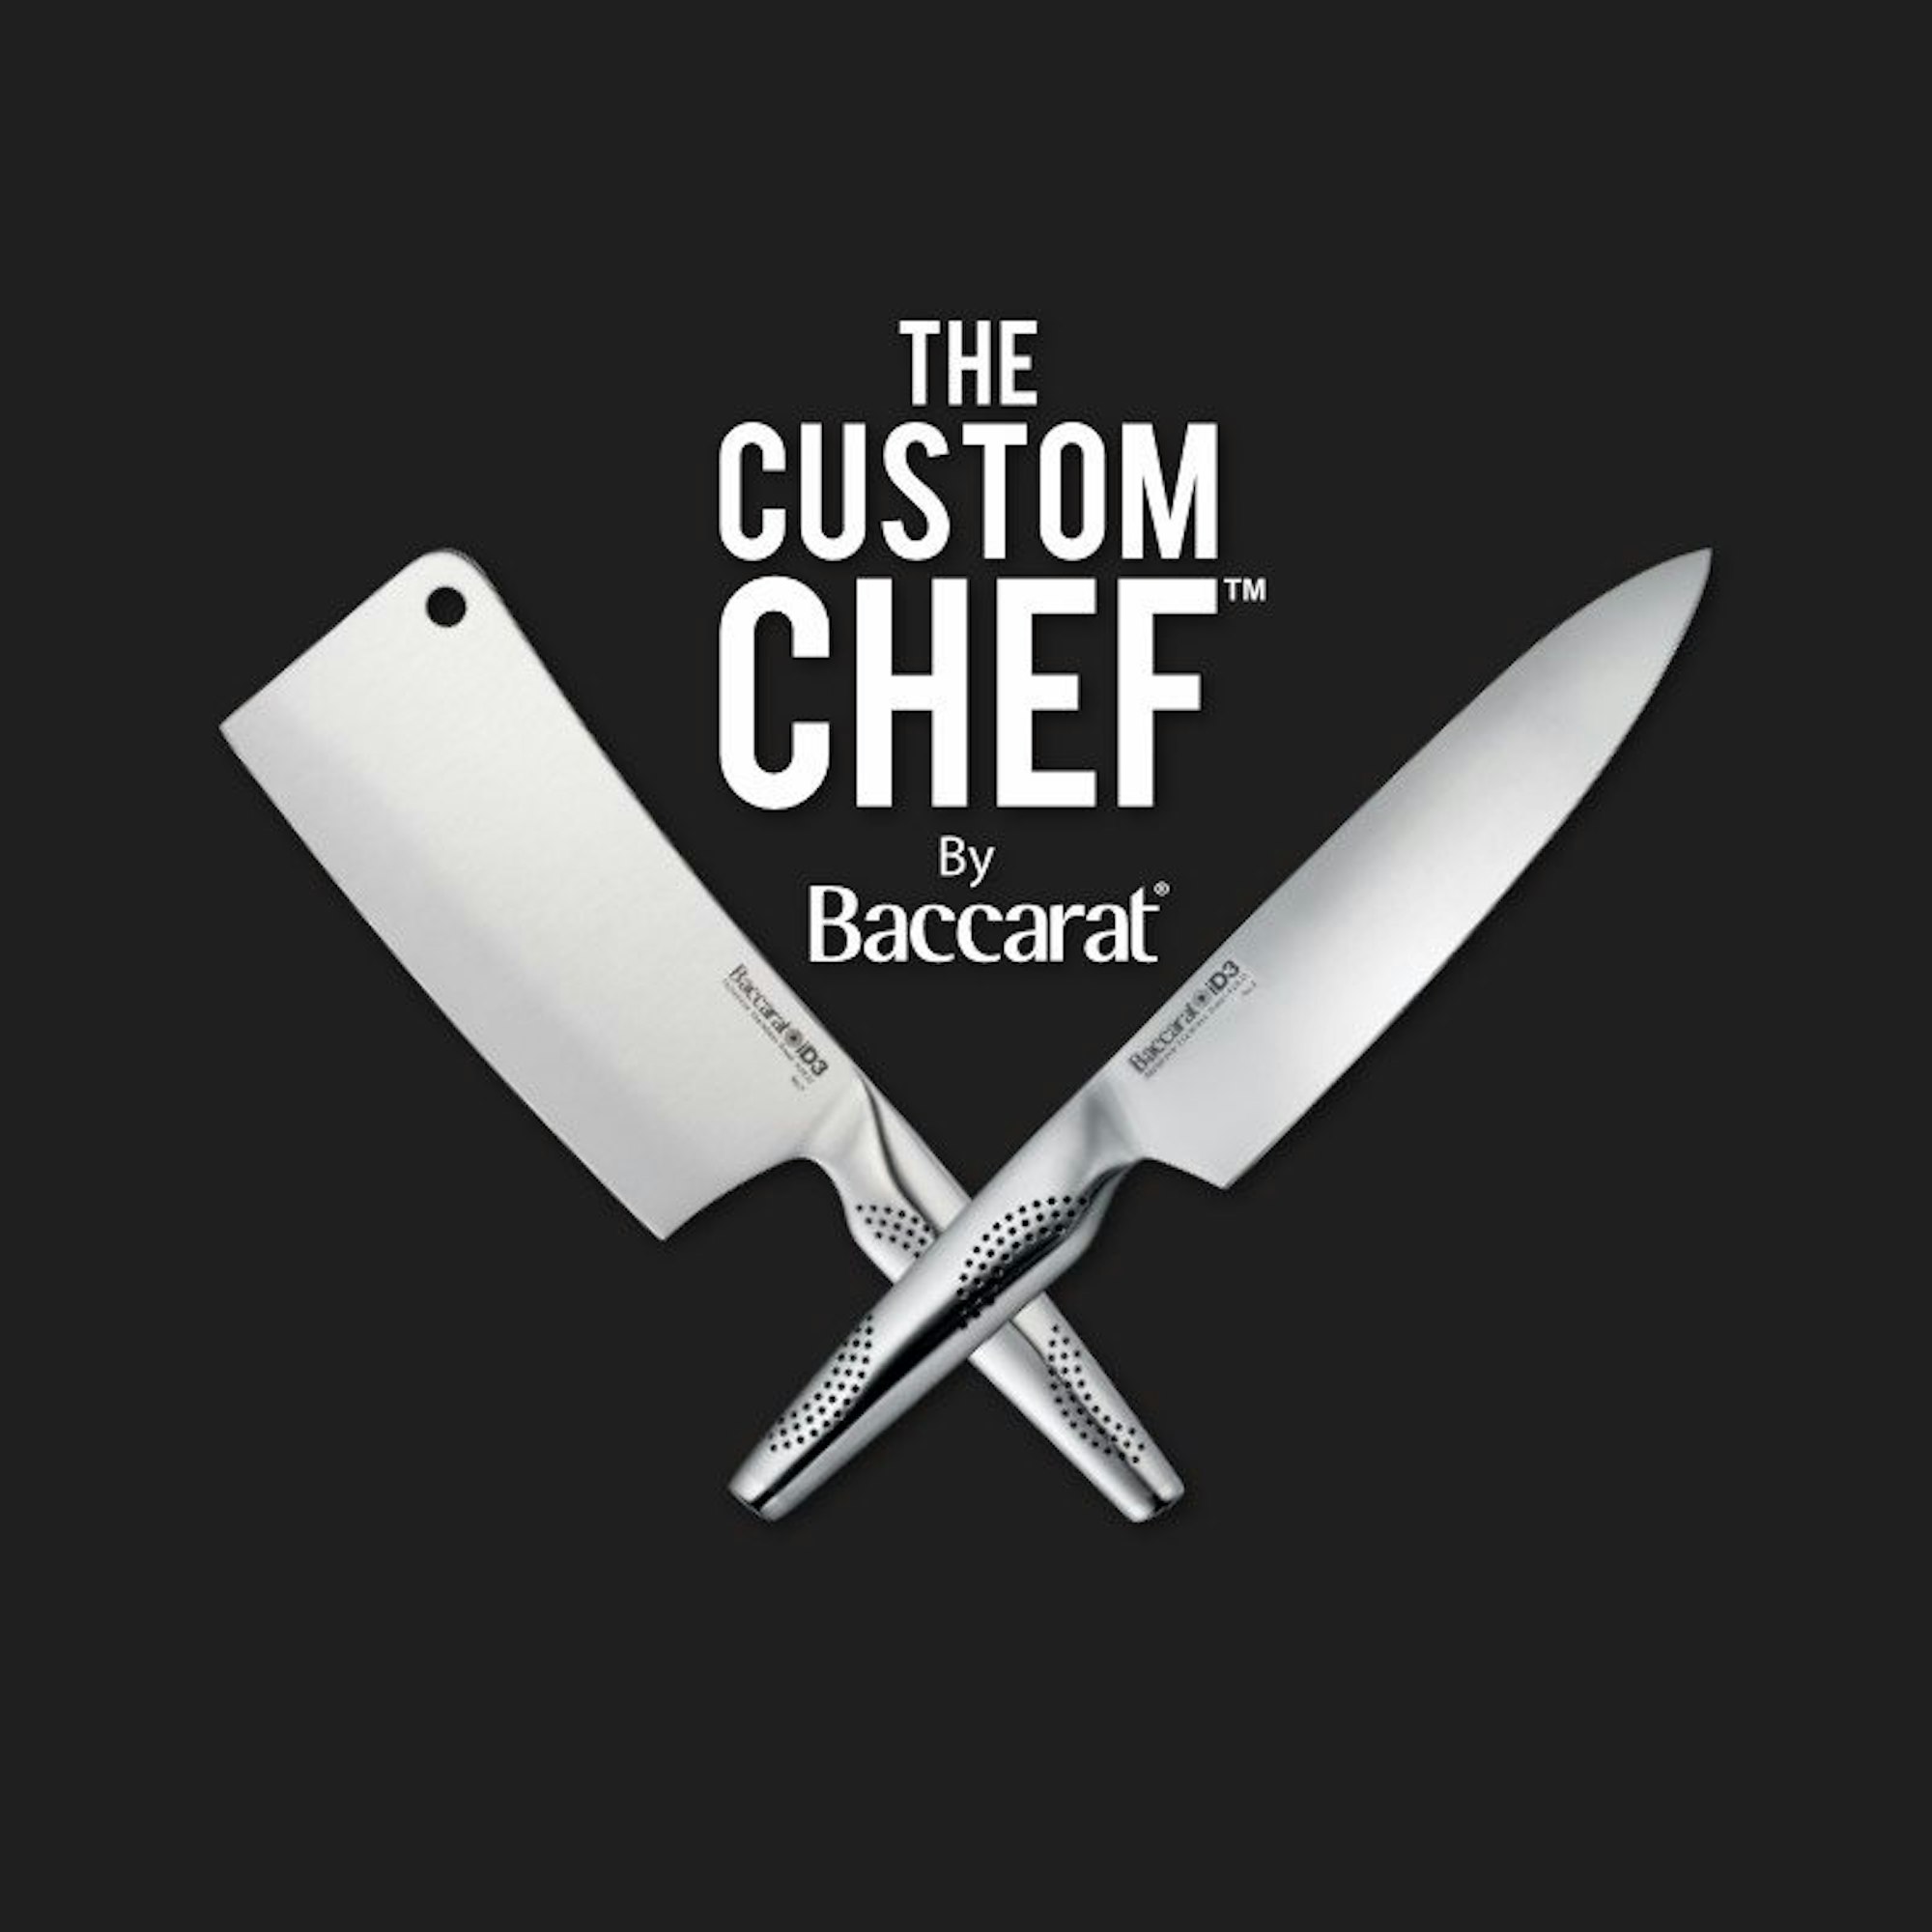 The Custom Chef